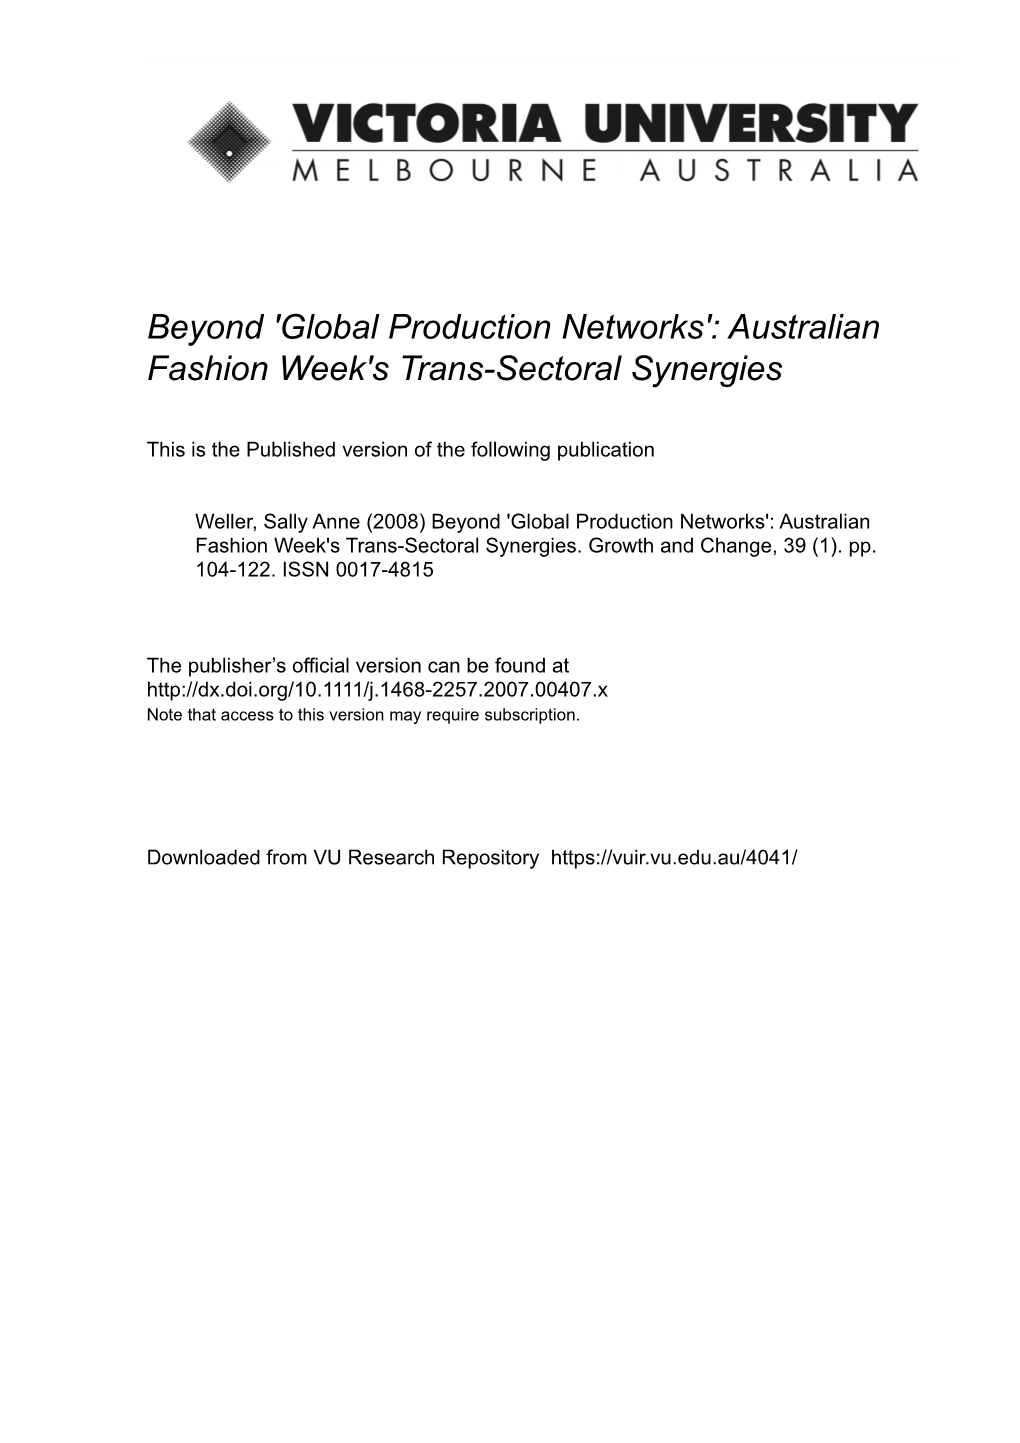 Australian Fashion Week's Trans-Sectoral Synergies